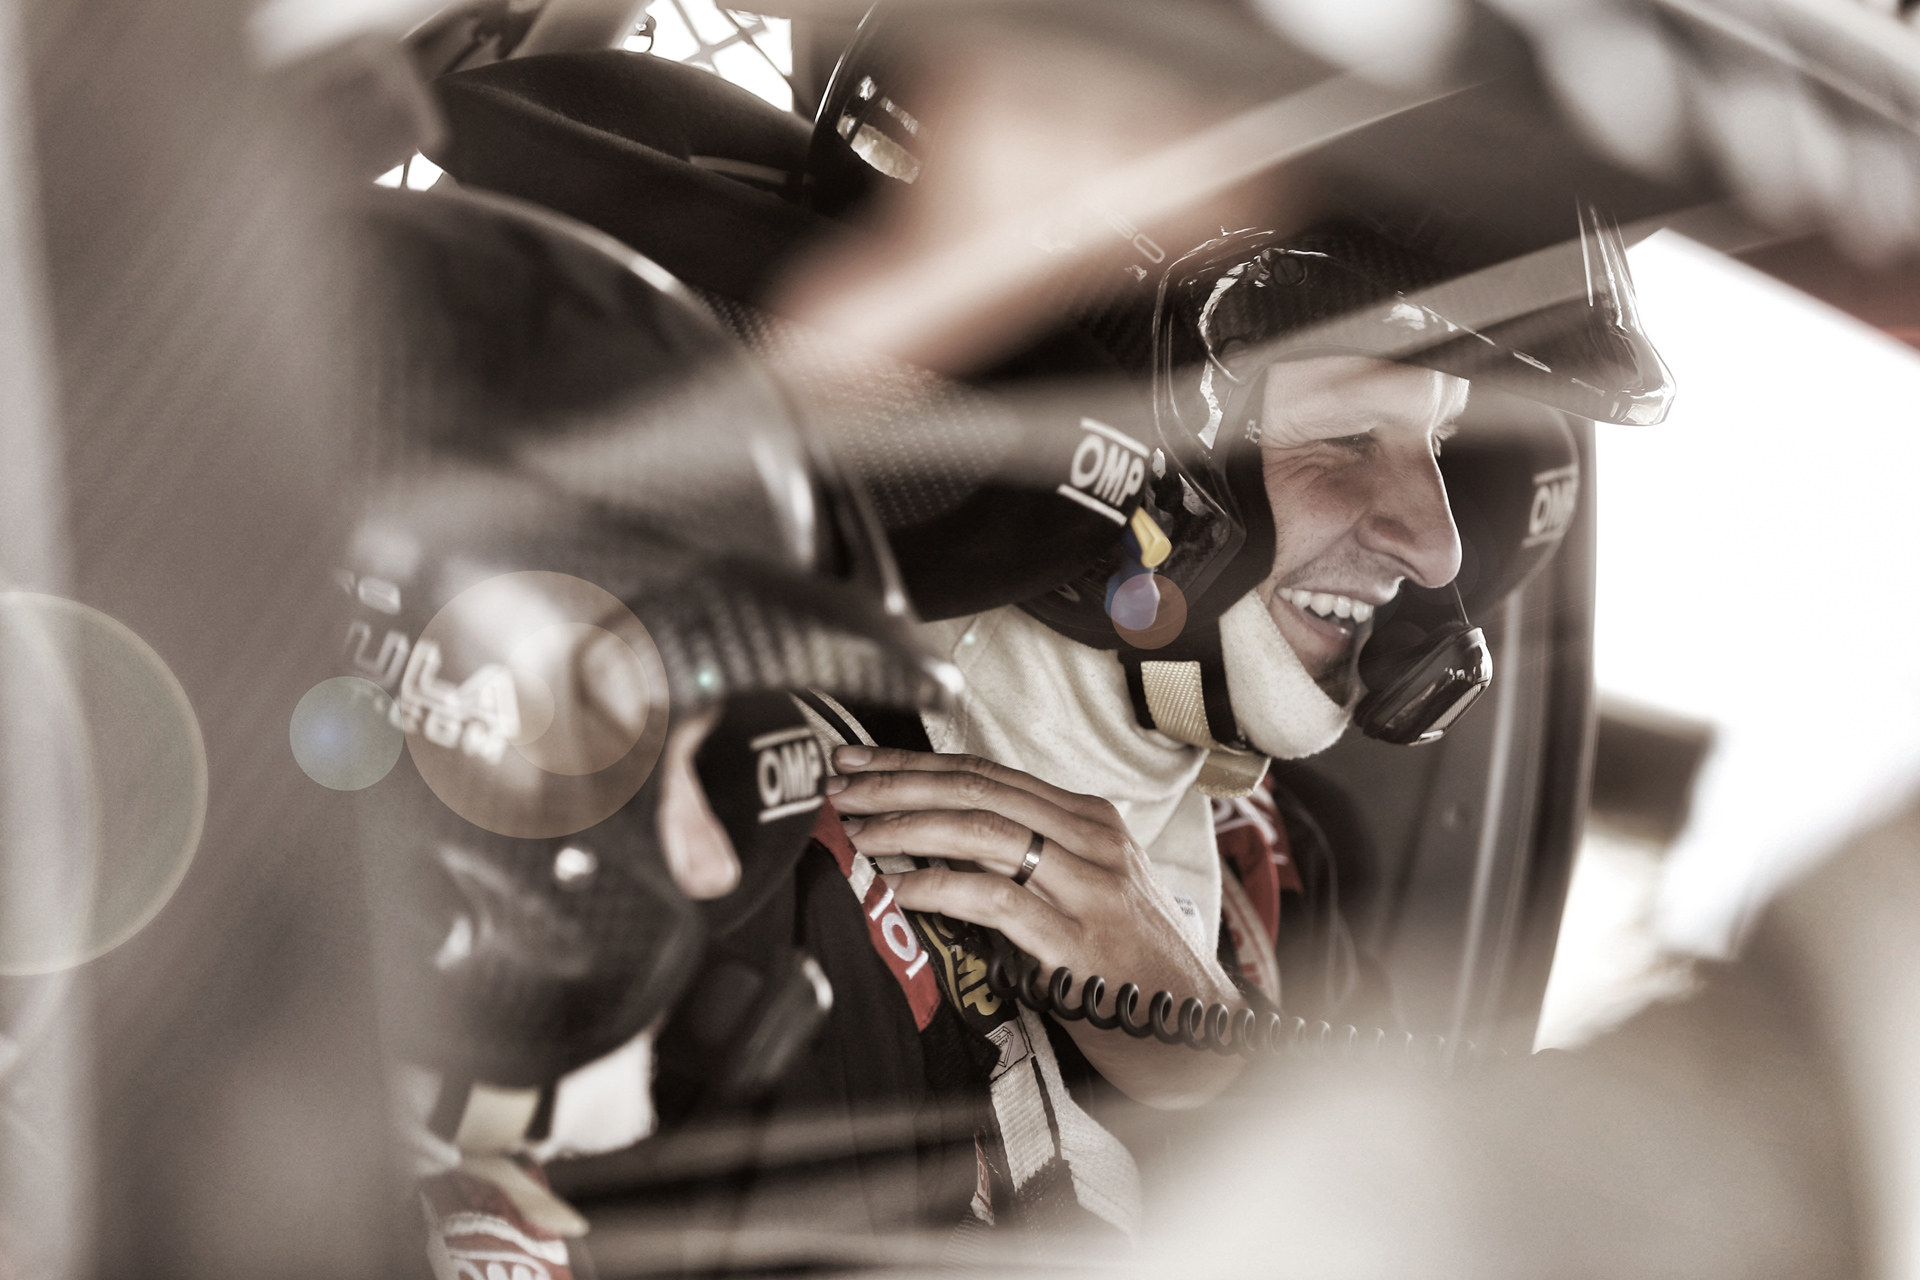 Test driver Juho Hanninen